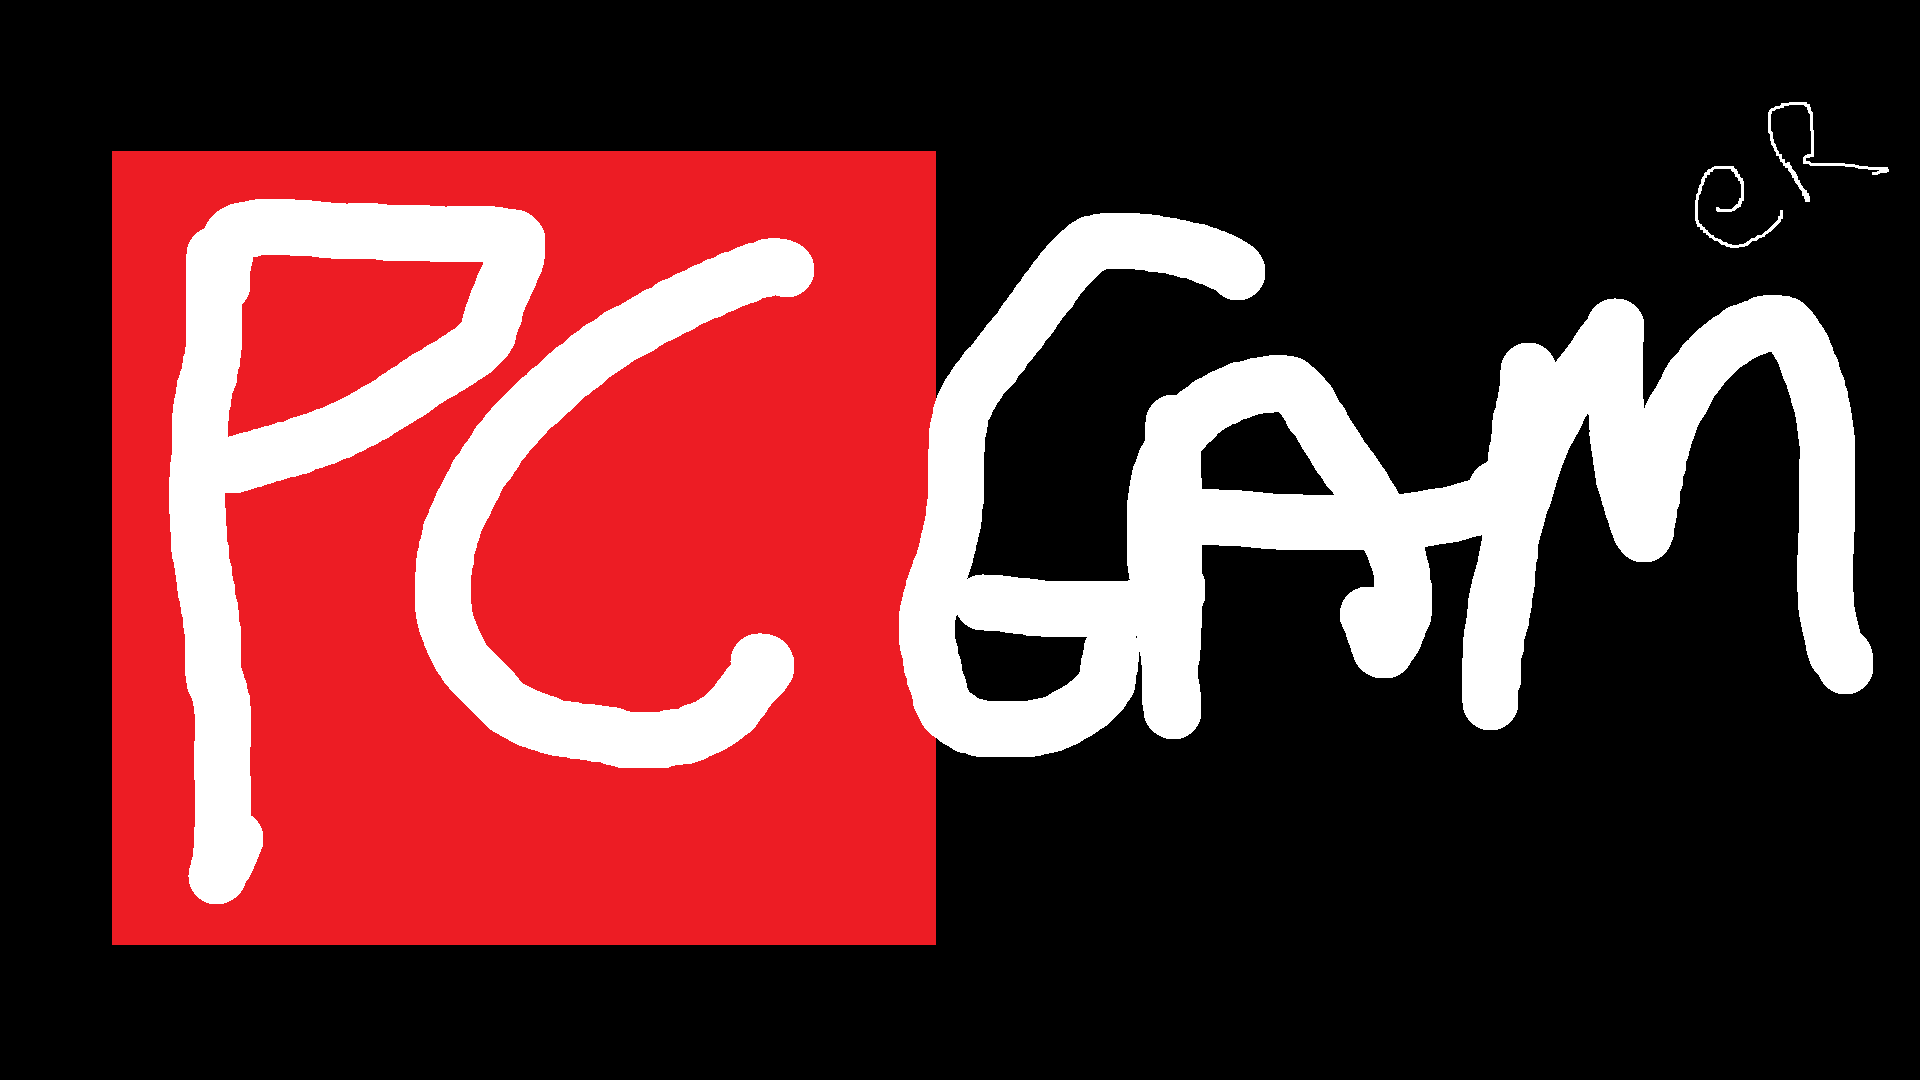 The PC Gamer logo crudely drawn.